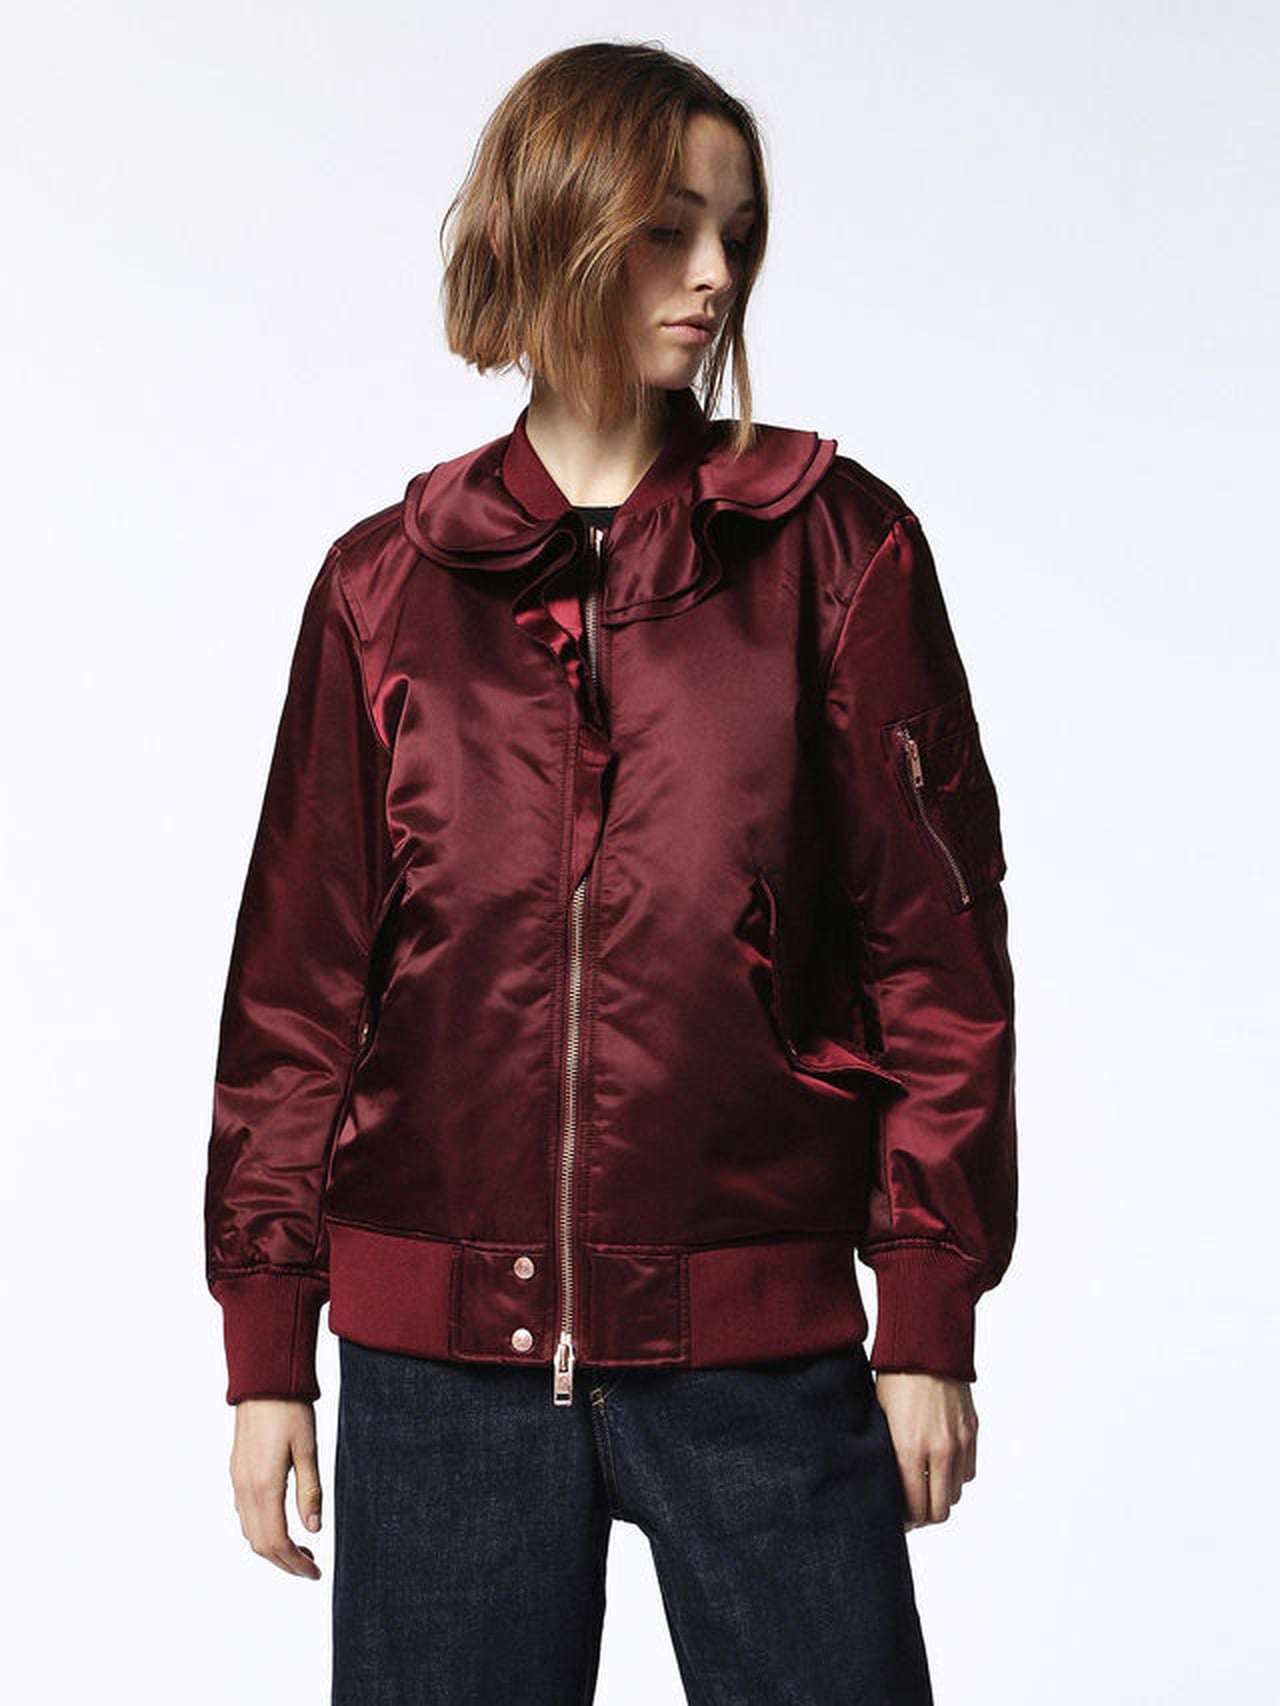 Taylor Swift Wearing Red Bomber Jacket | POPSUGAR Fashion